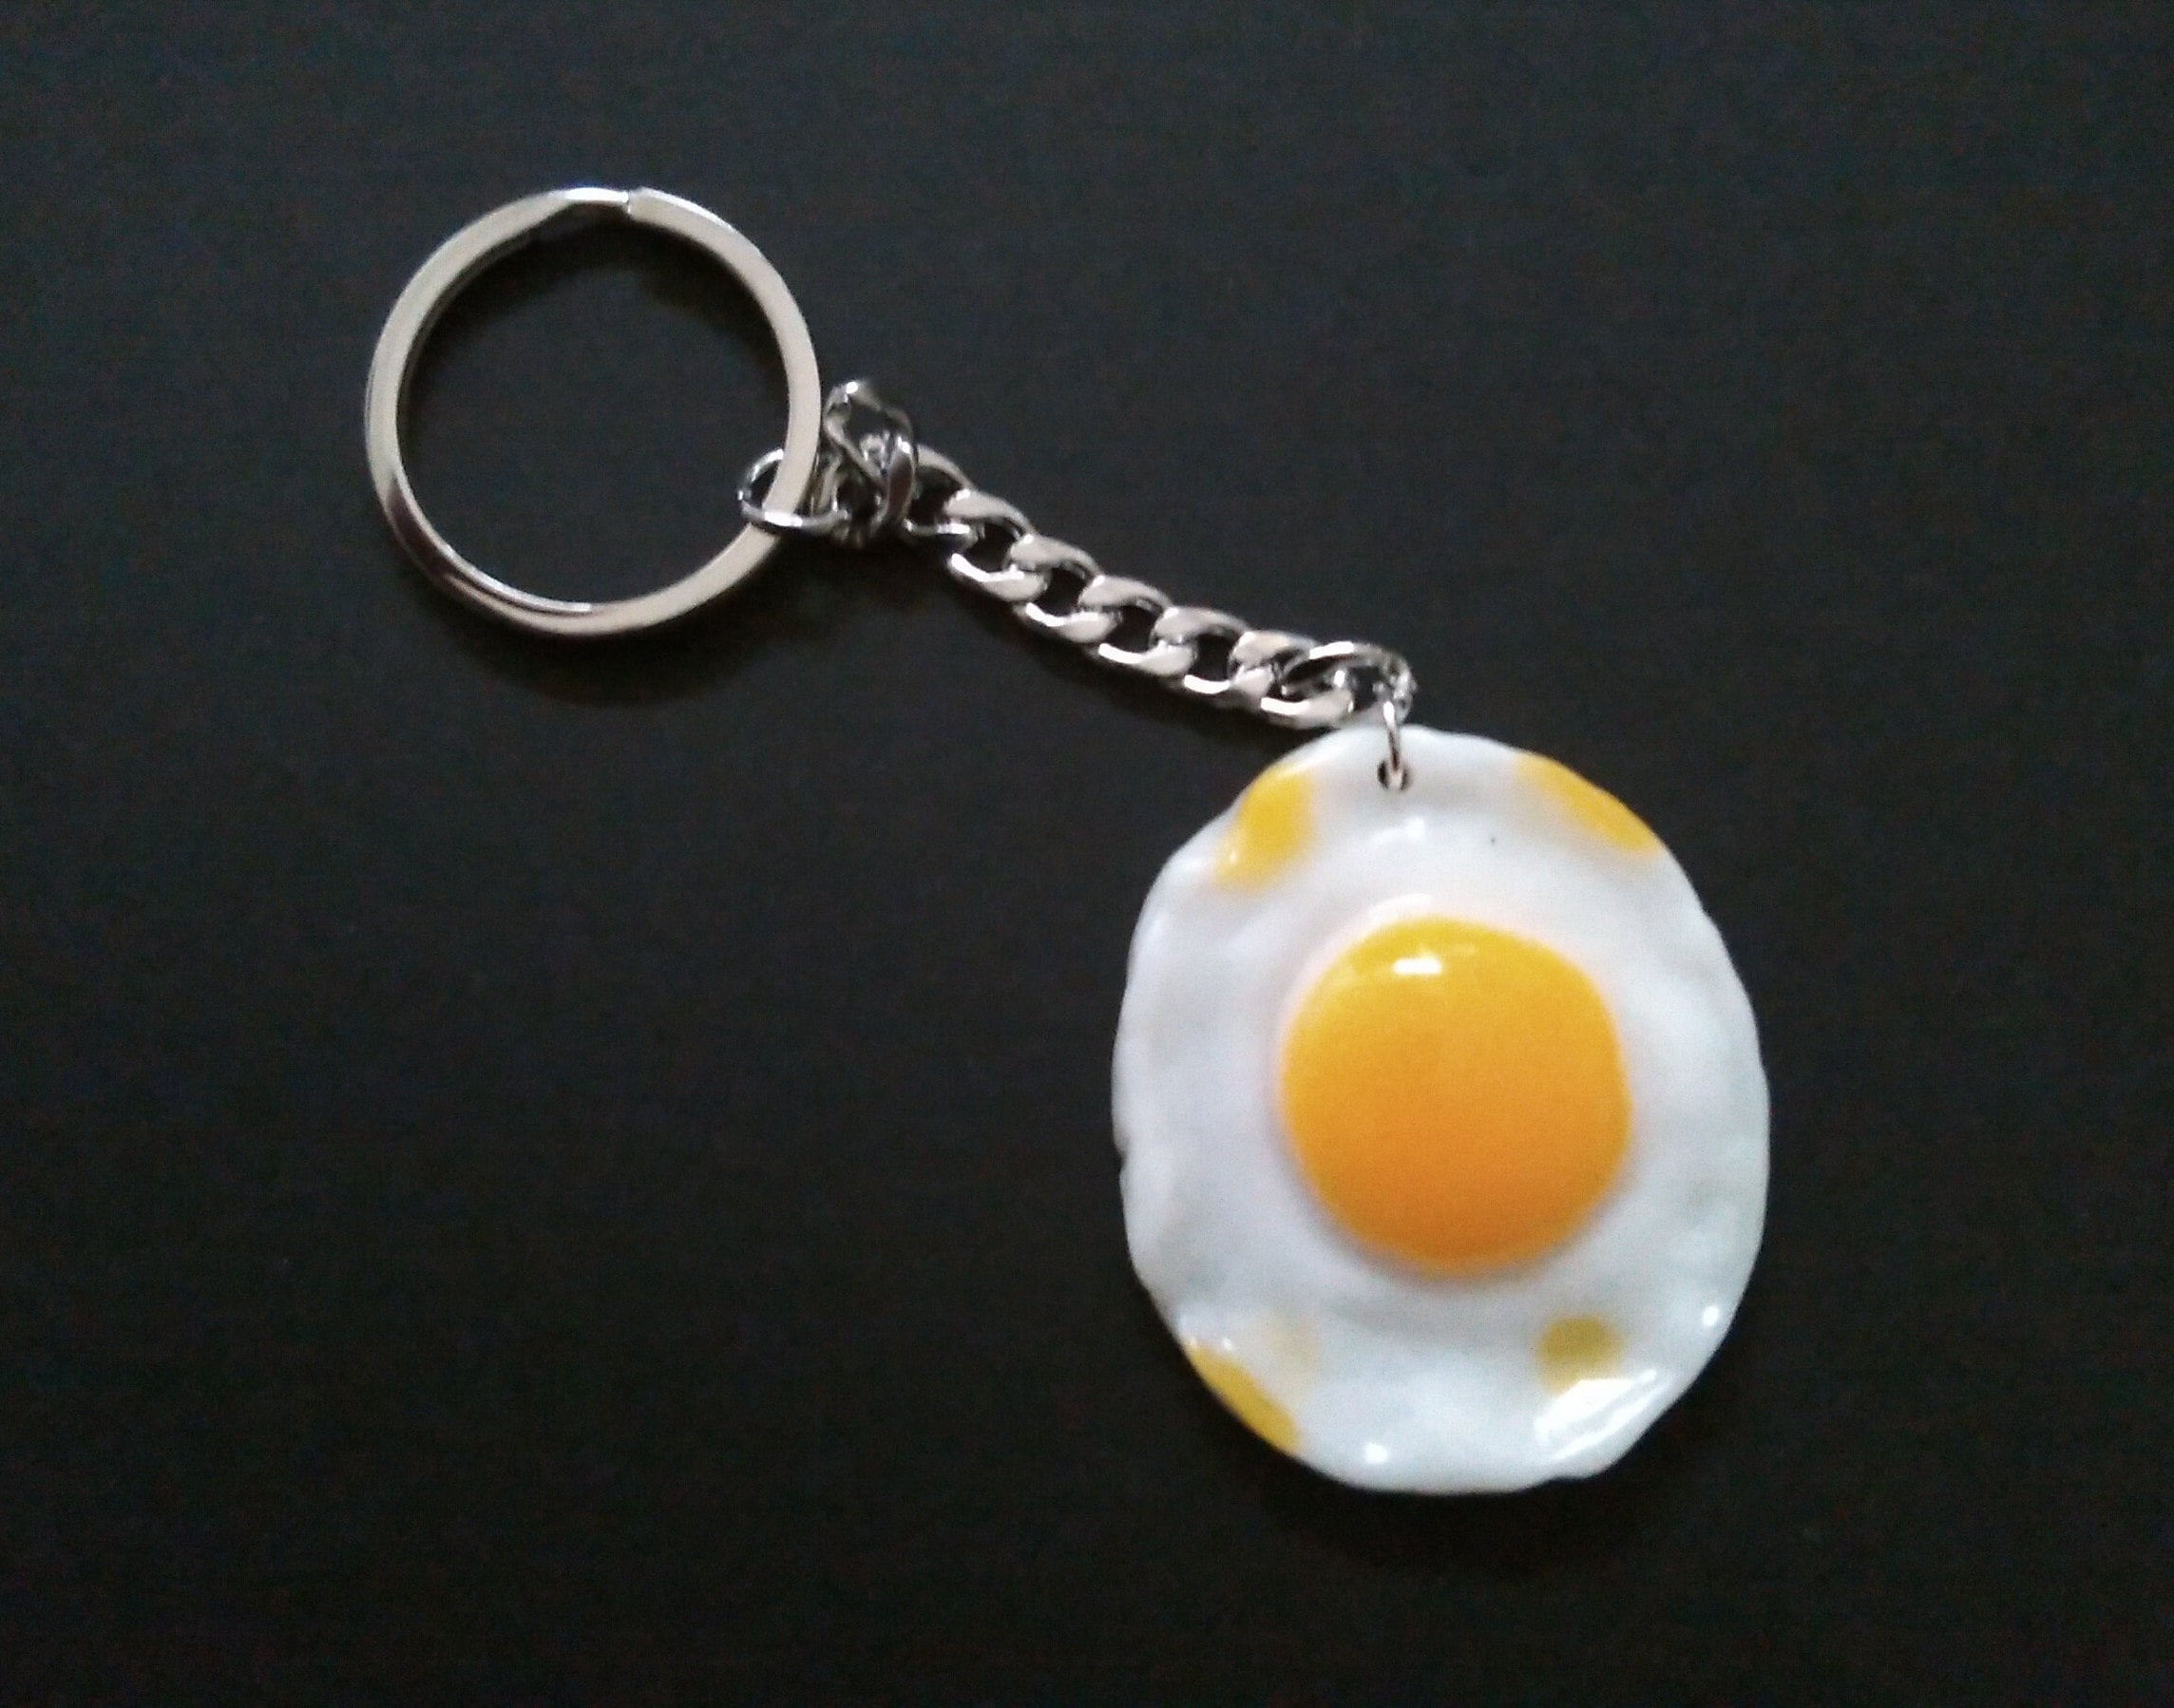 Fried Egg Charm Keychain Accessories Pendant Bag Charm Key Ring